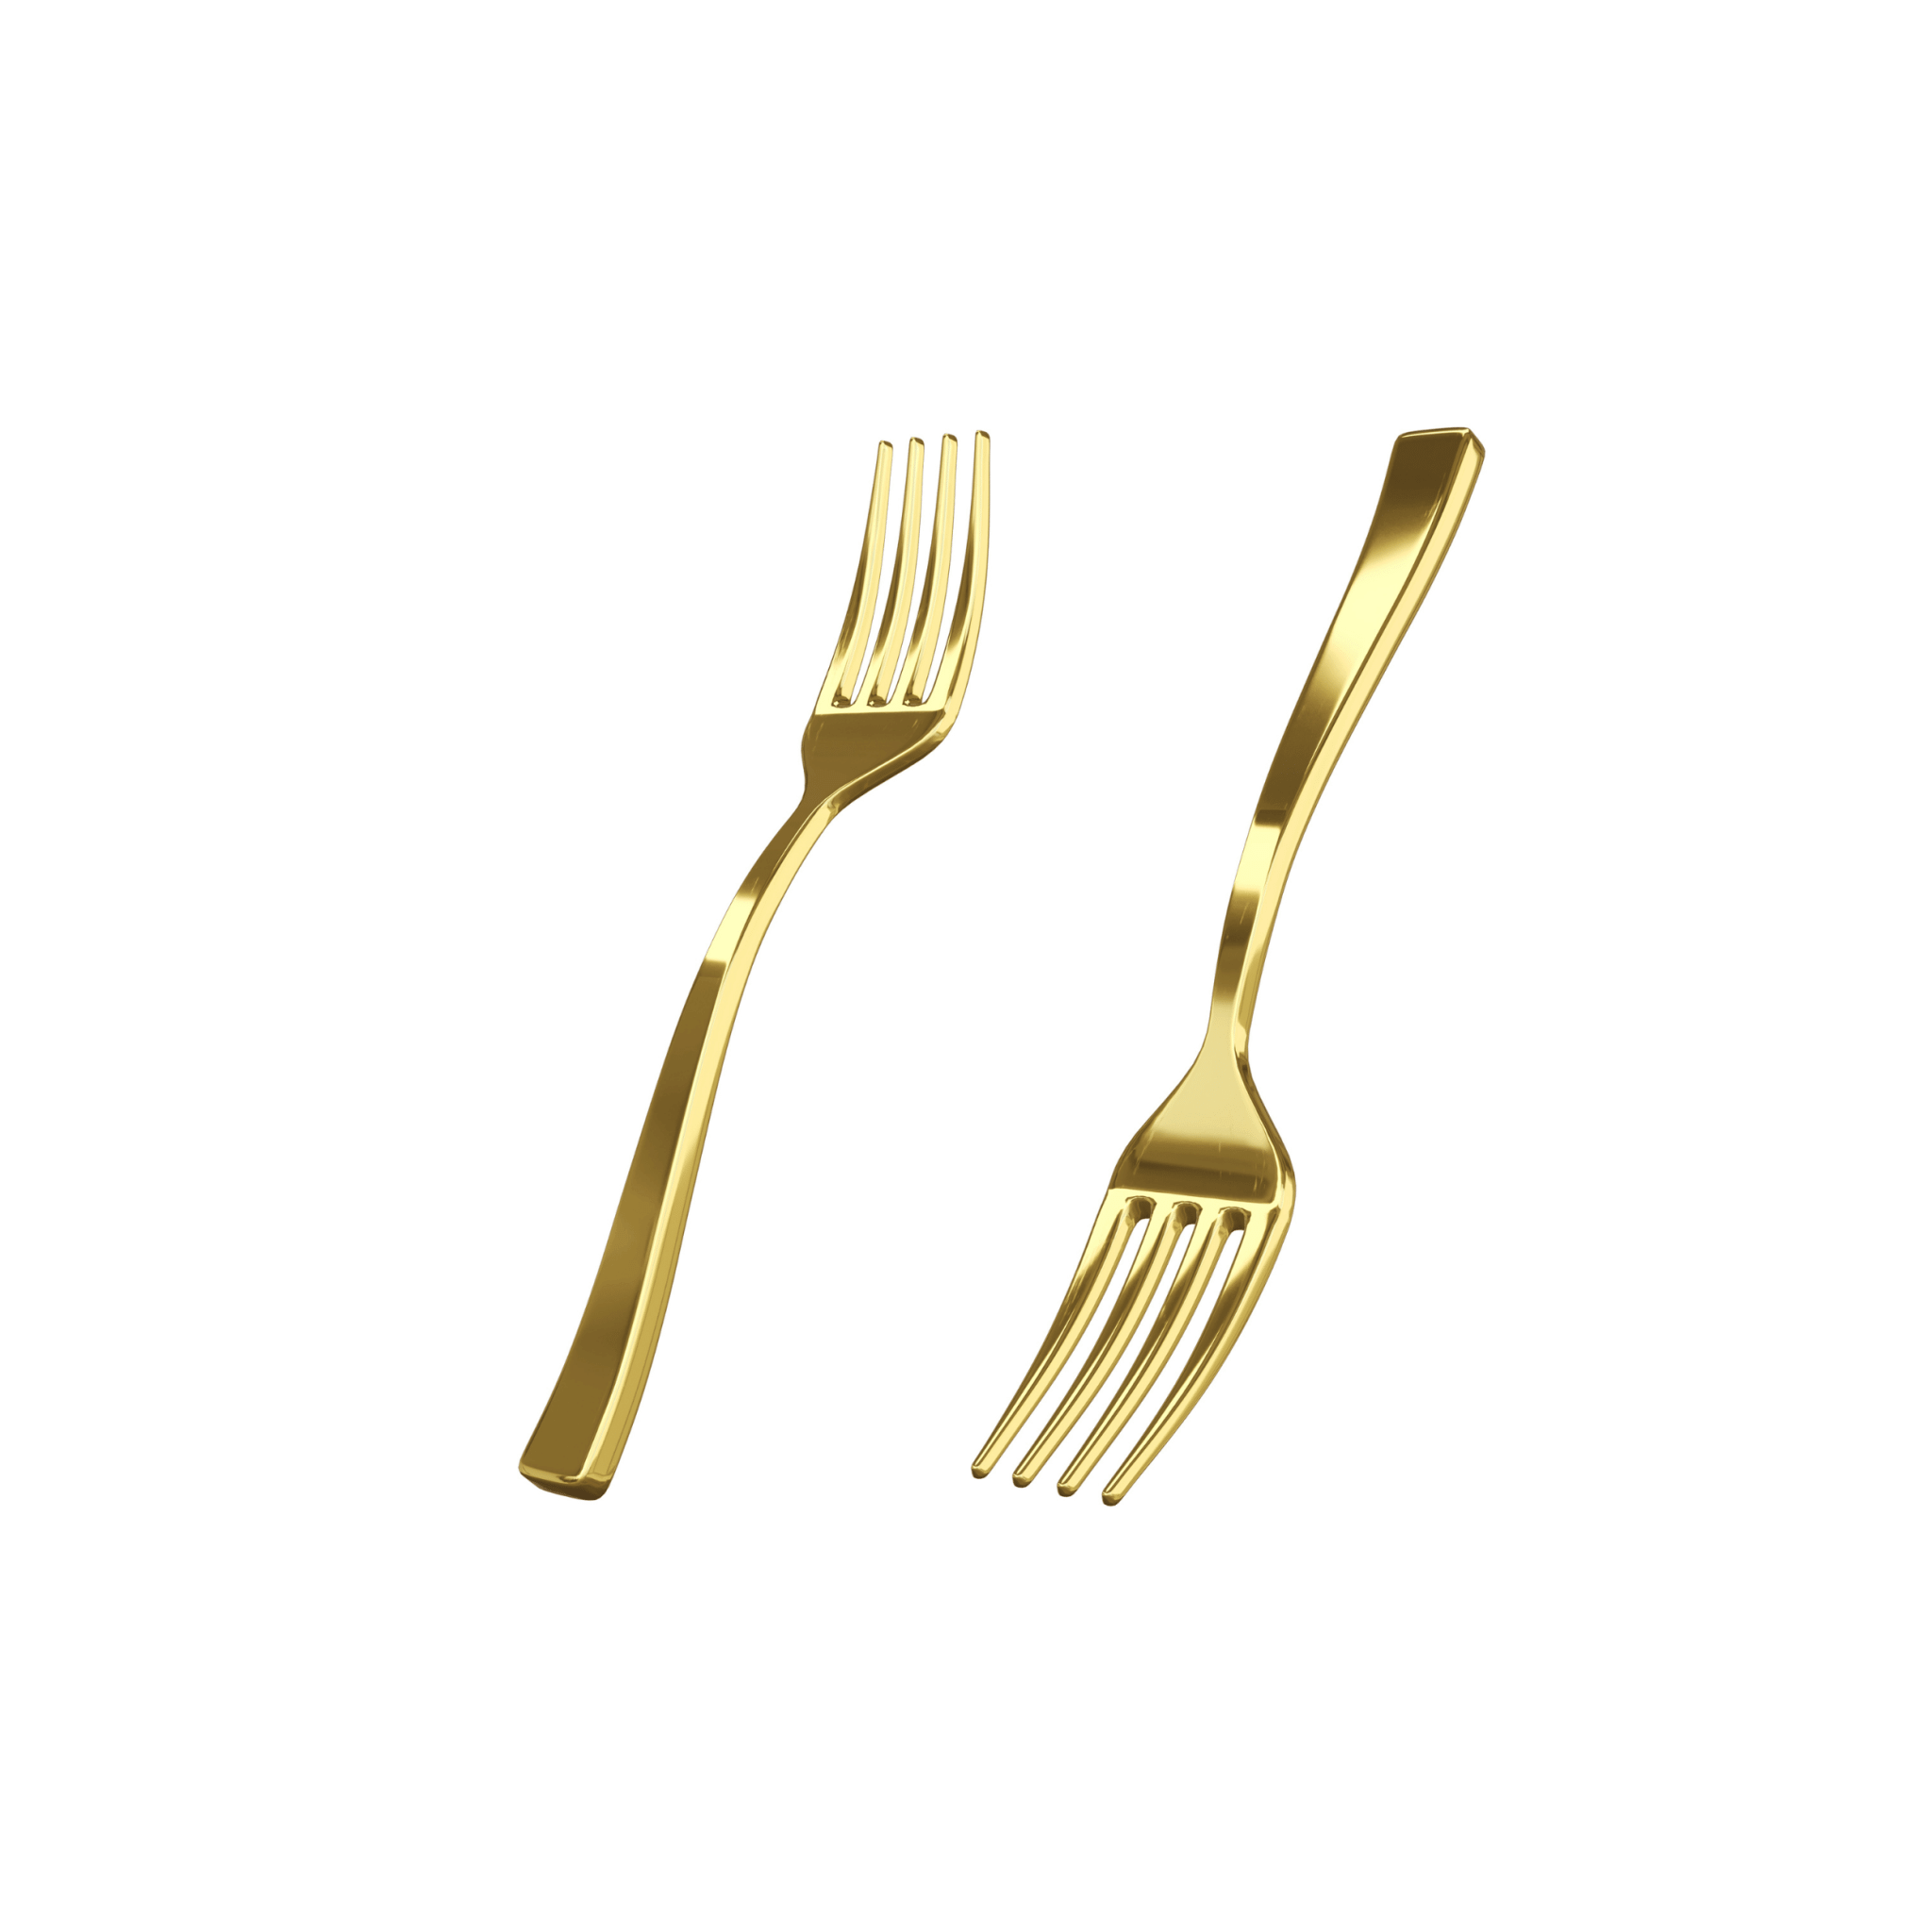 Exquisite Gold Plastic Tasting Forks | 500 Count